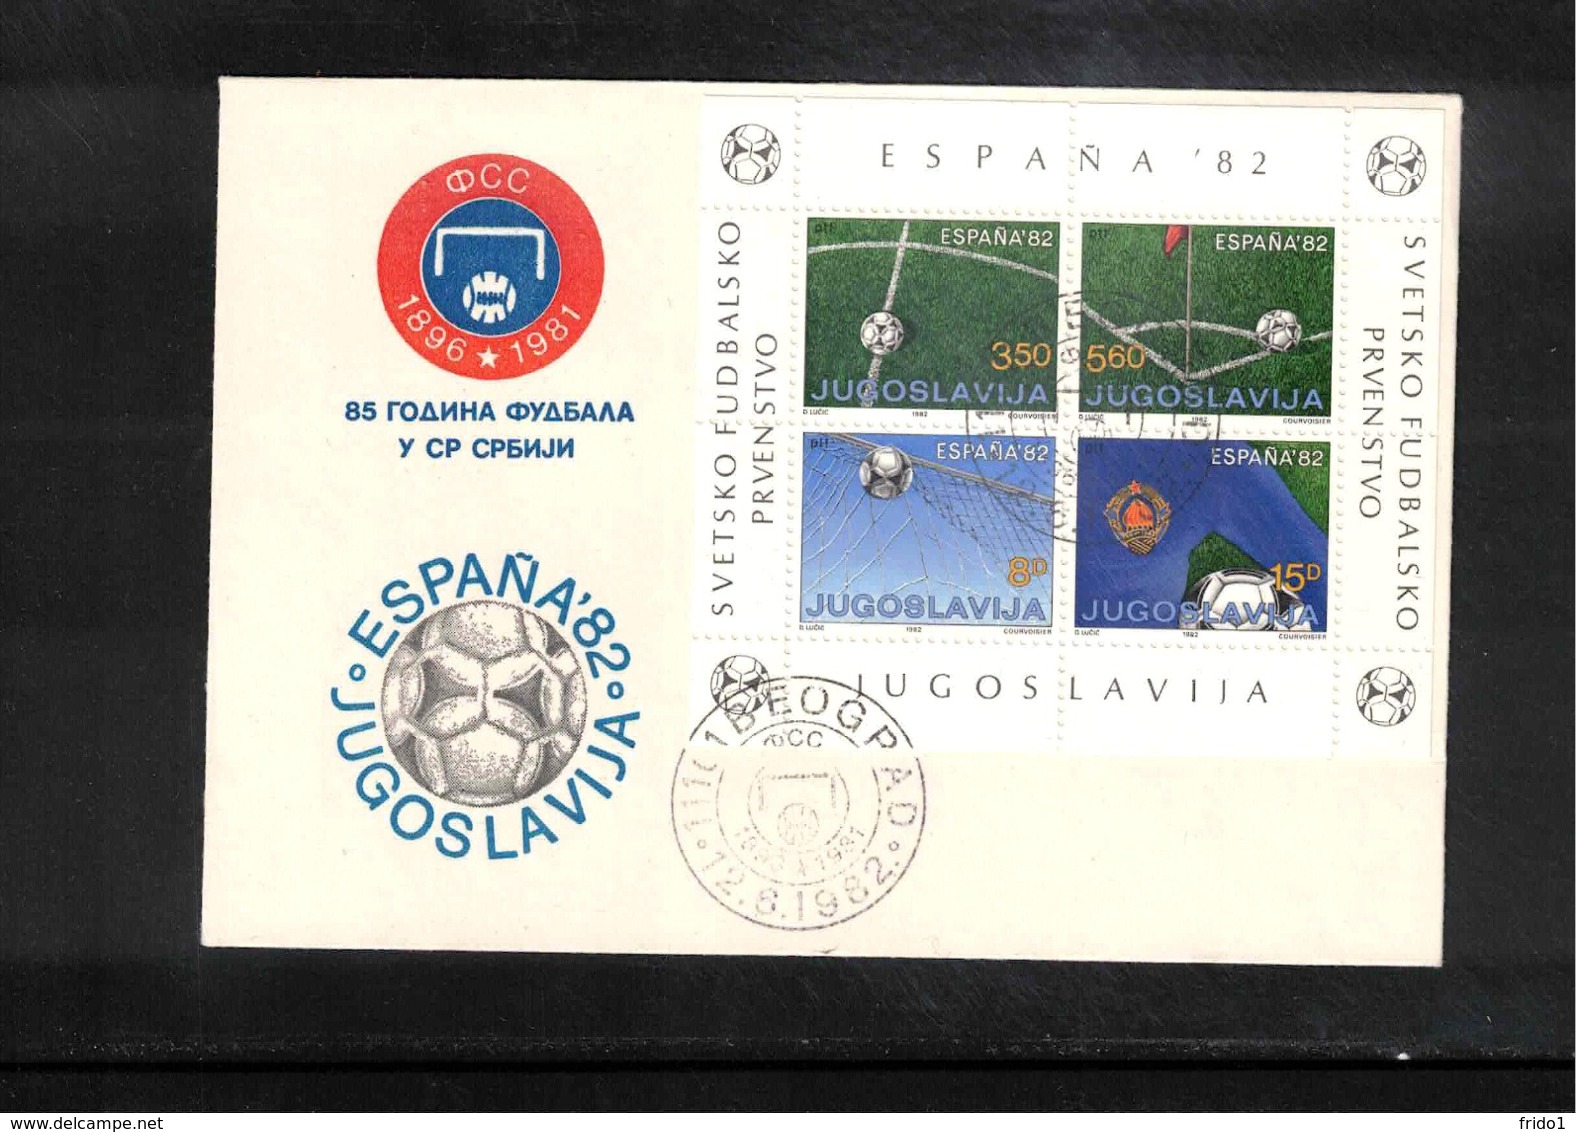 Jugoslawien / Yugoslavia 1982 85 Years Of Football In Serbia Interesting Cover - Briefe U. Dokumente